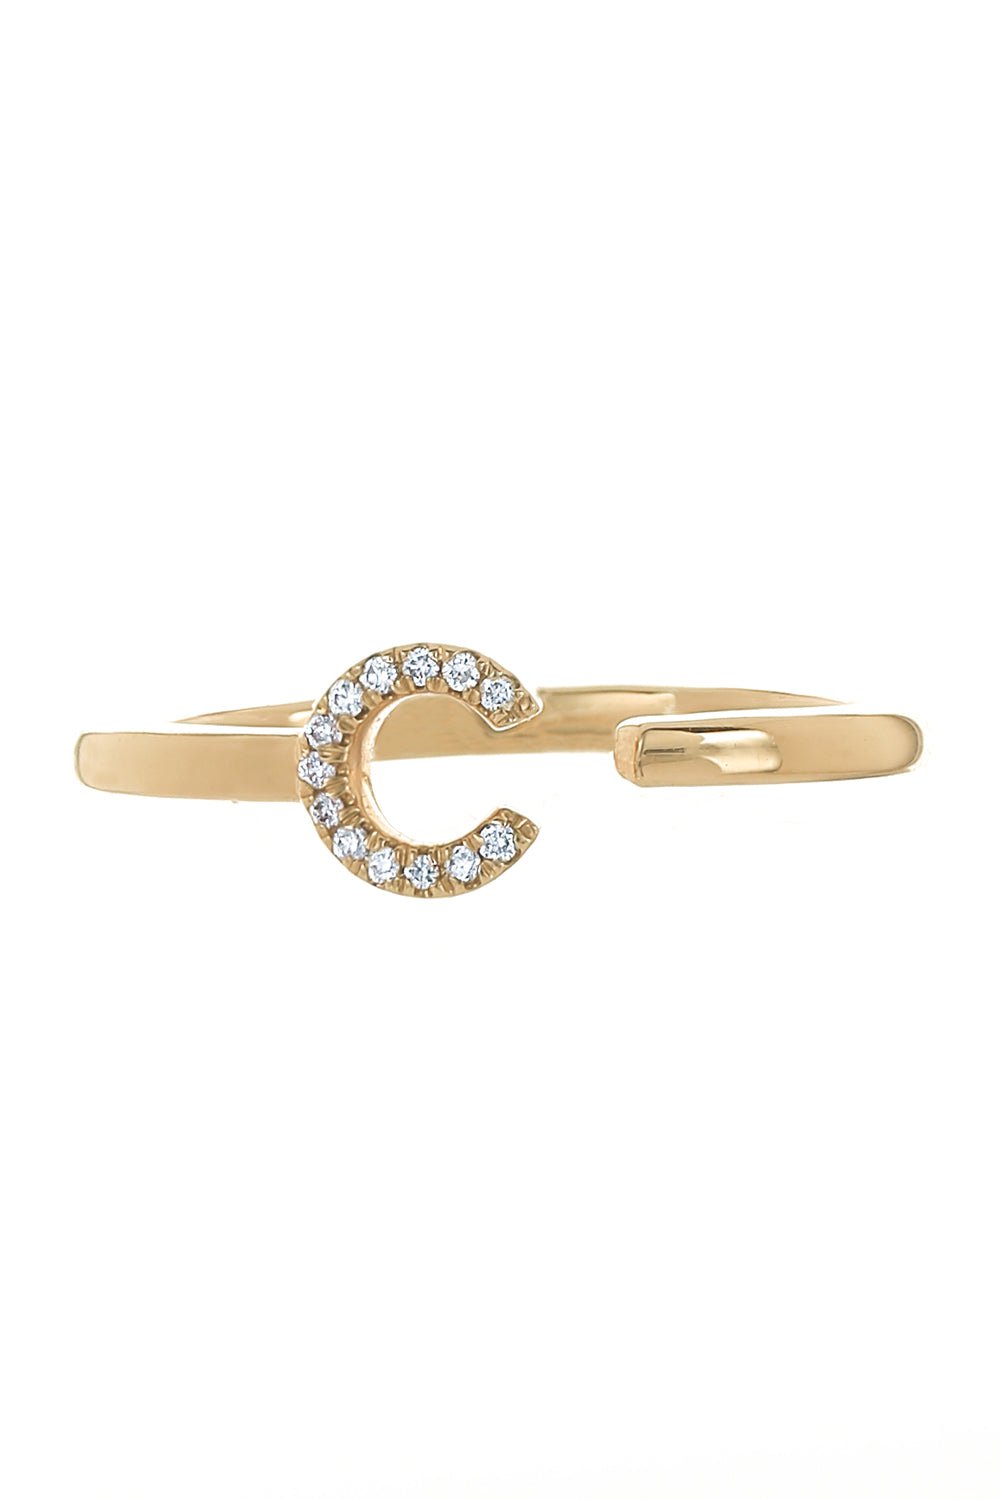 DANA REBECCA DESIGNS-C Diamond Single Initial Ring-YELLOW GOLD